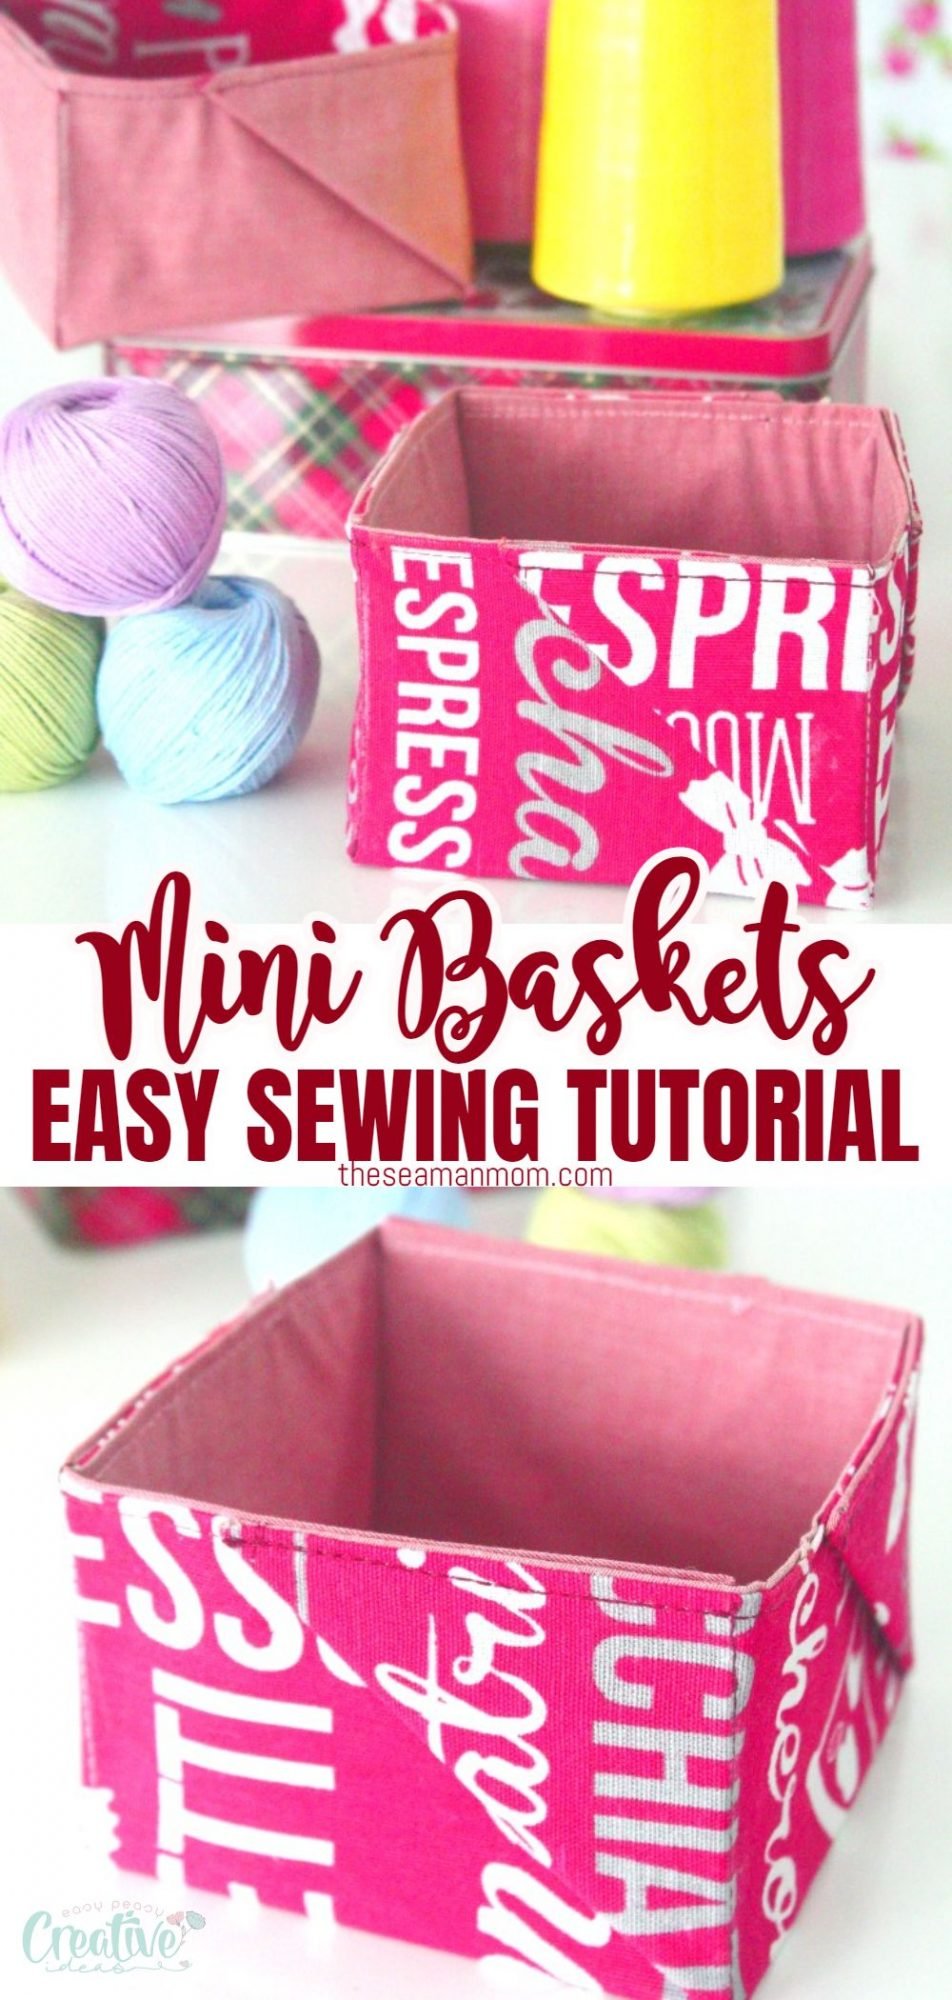 Fabric baskets tutorial